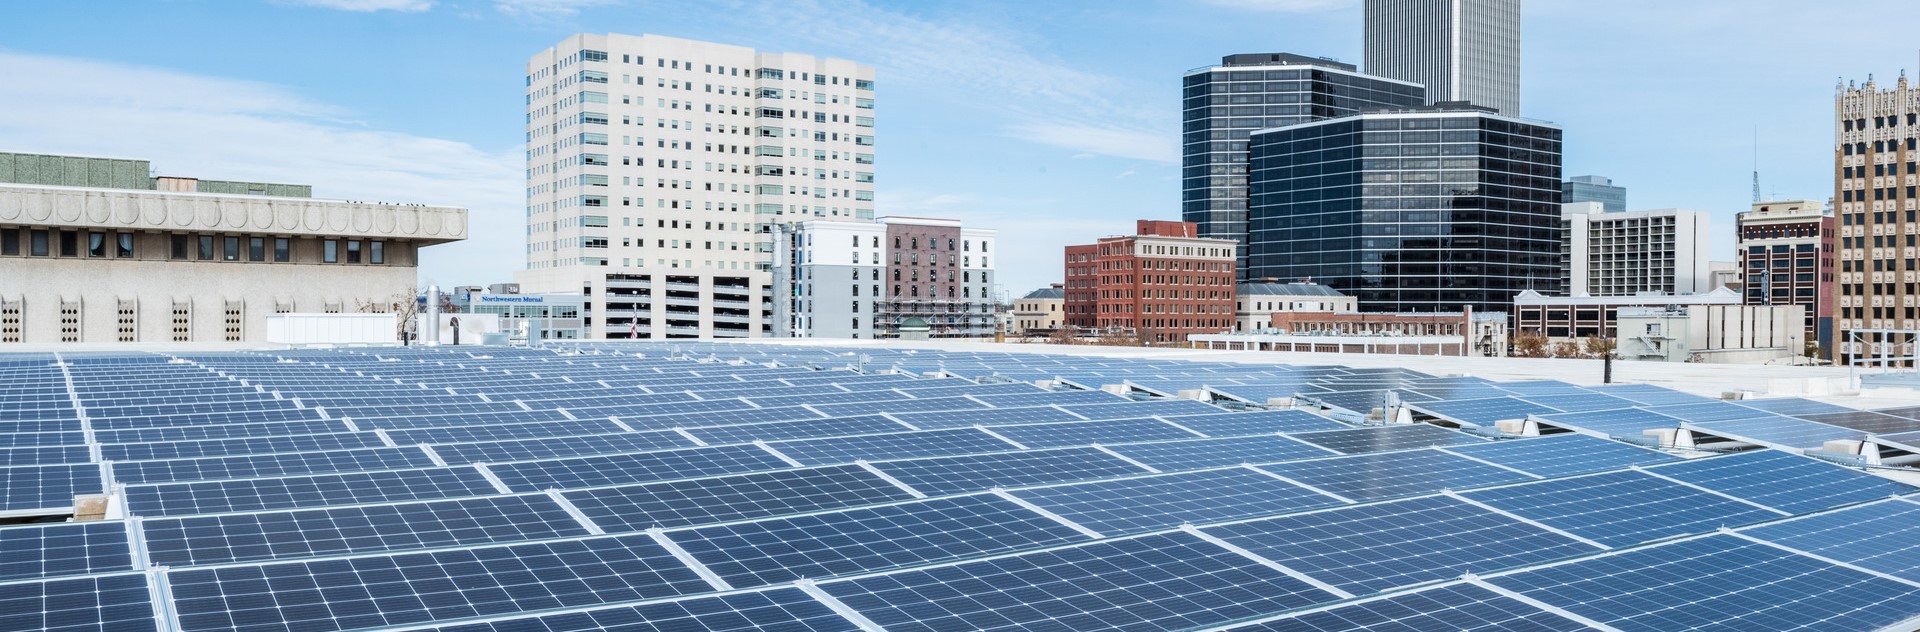 rooftop solar in city